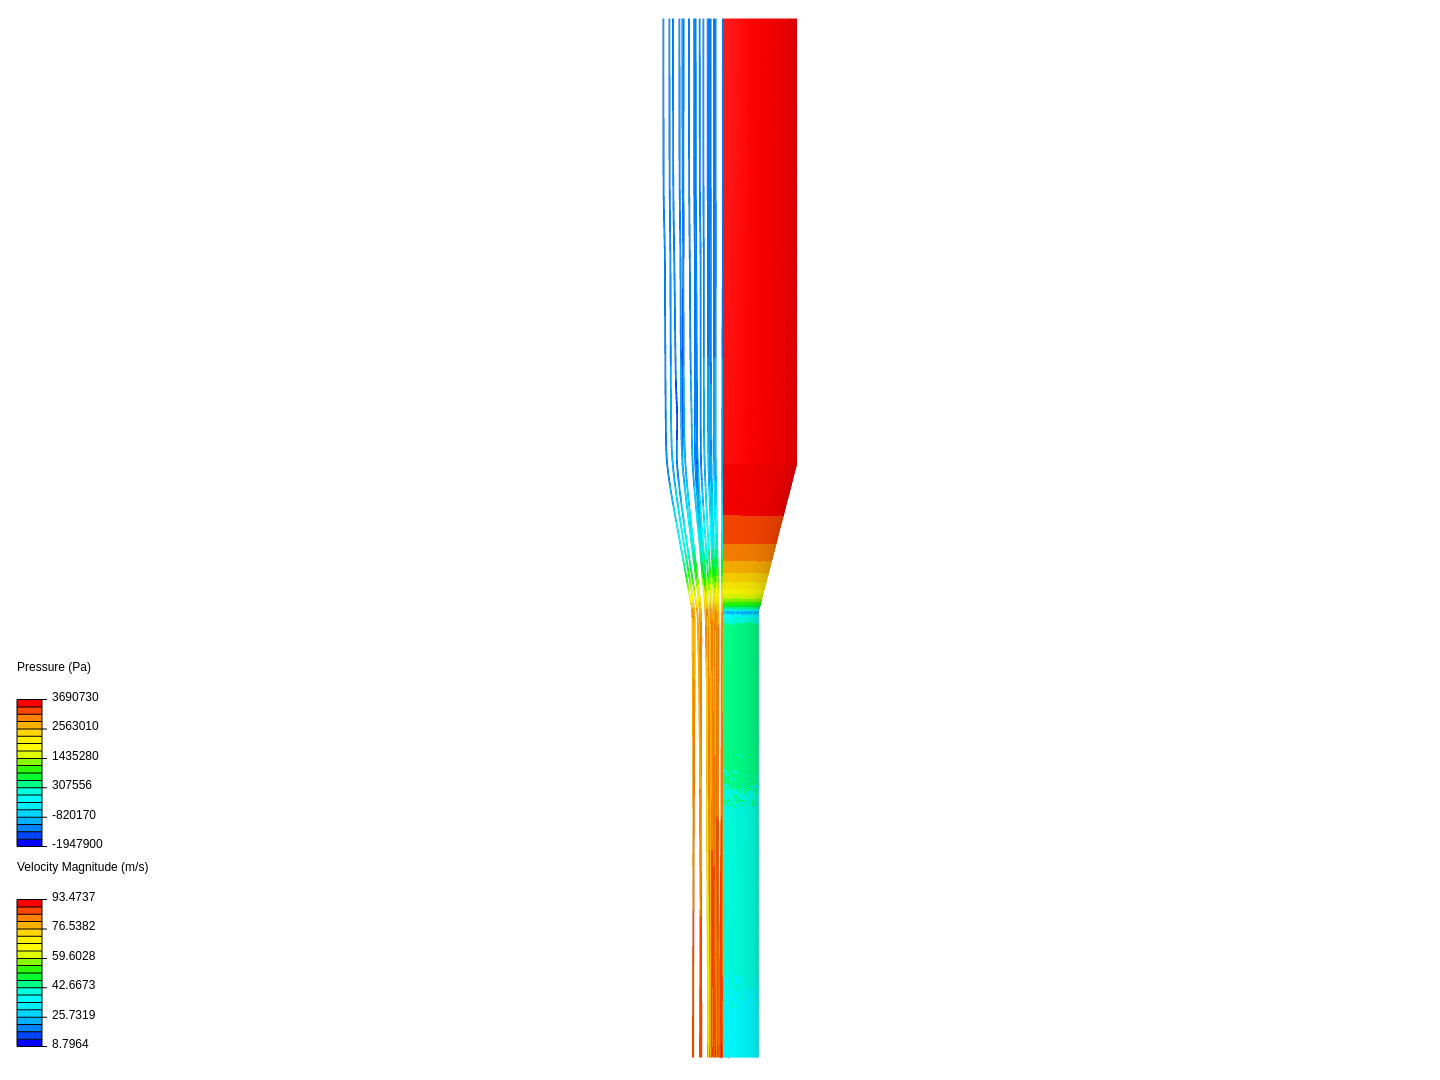 Bernoulli image